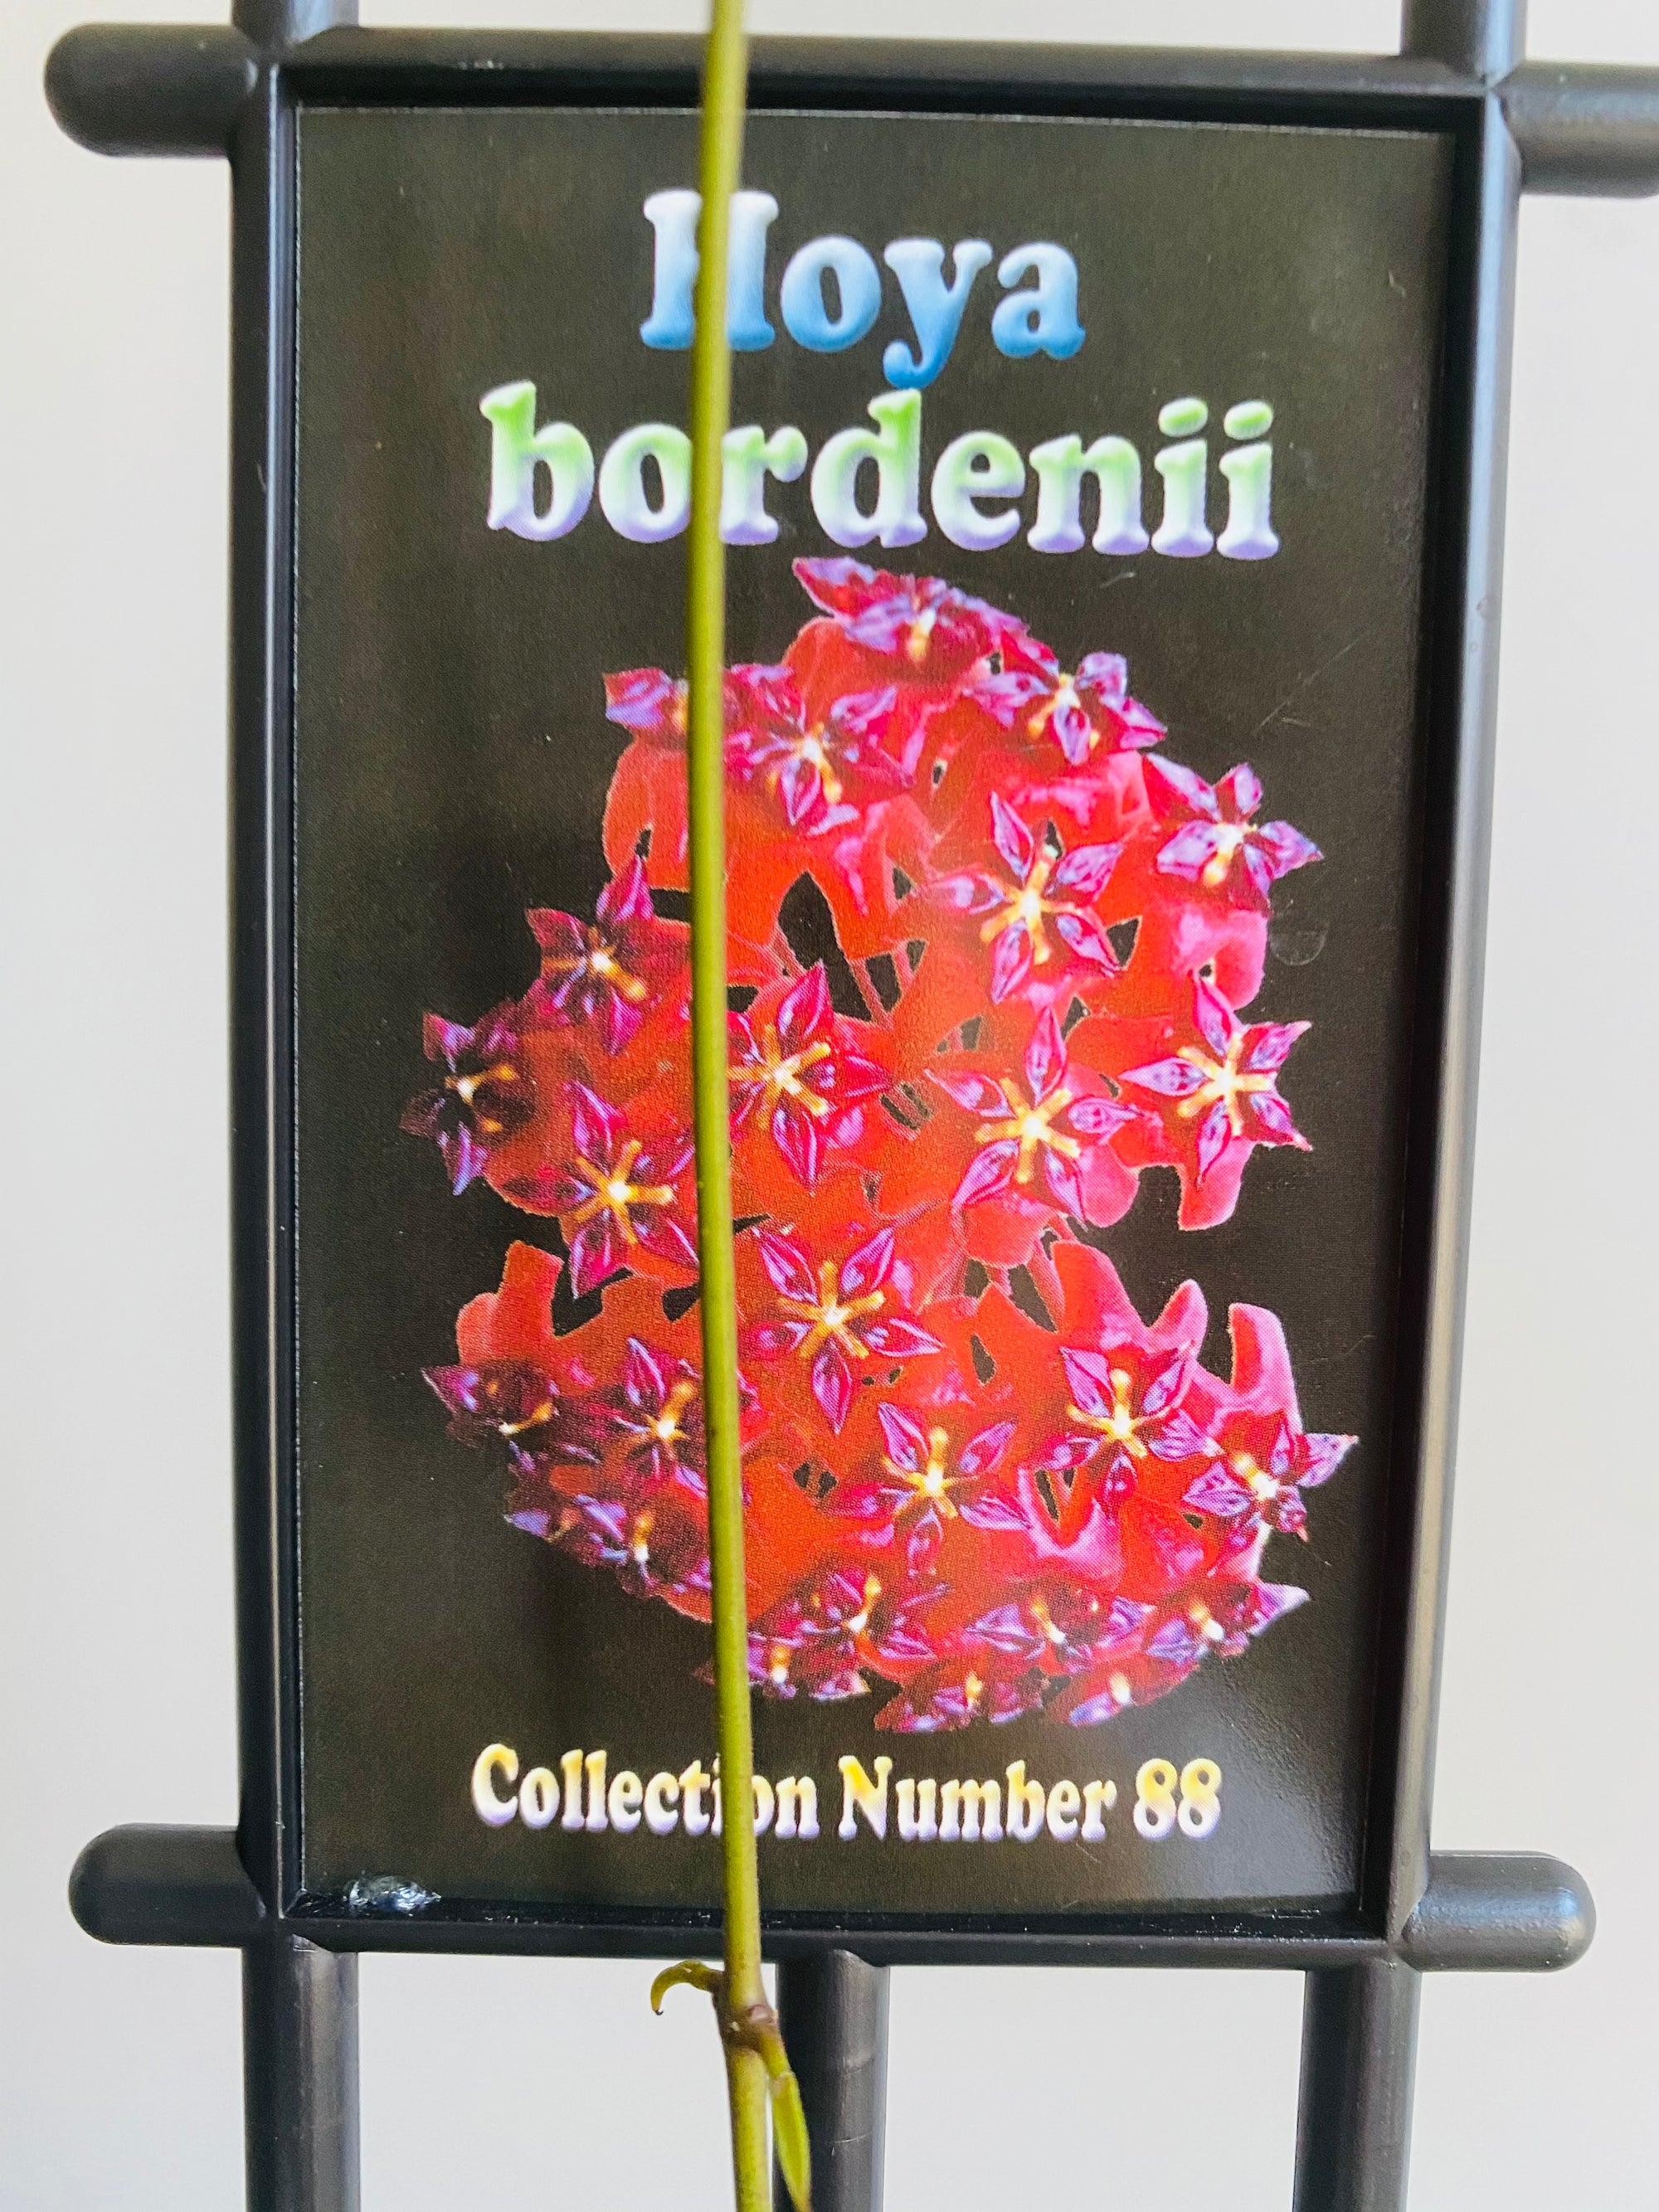 Hoya - Bordenii Collection No. 88